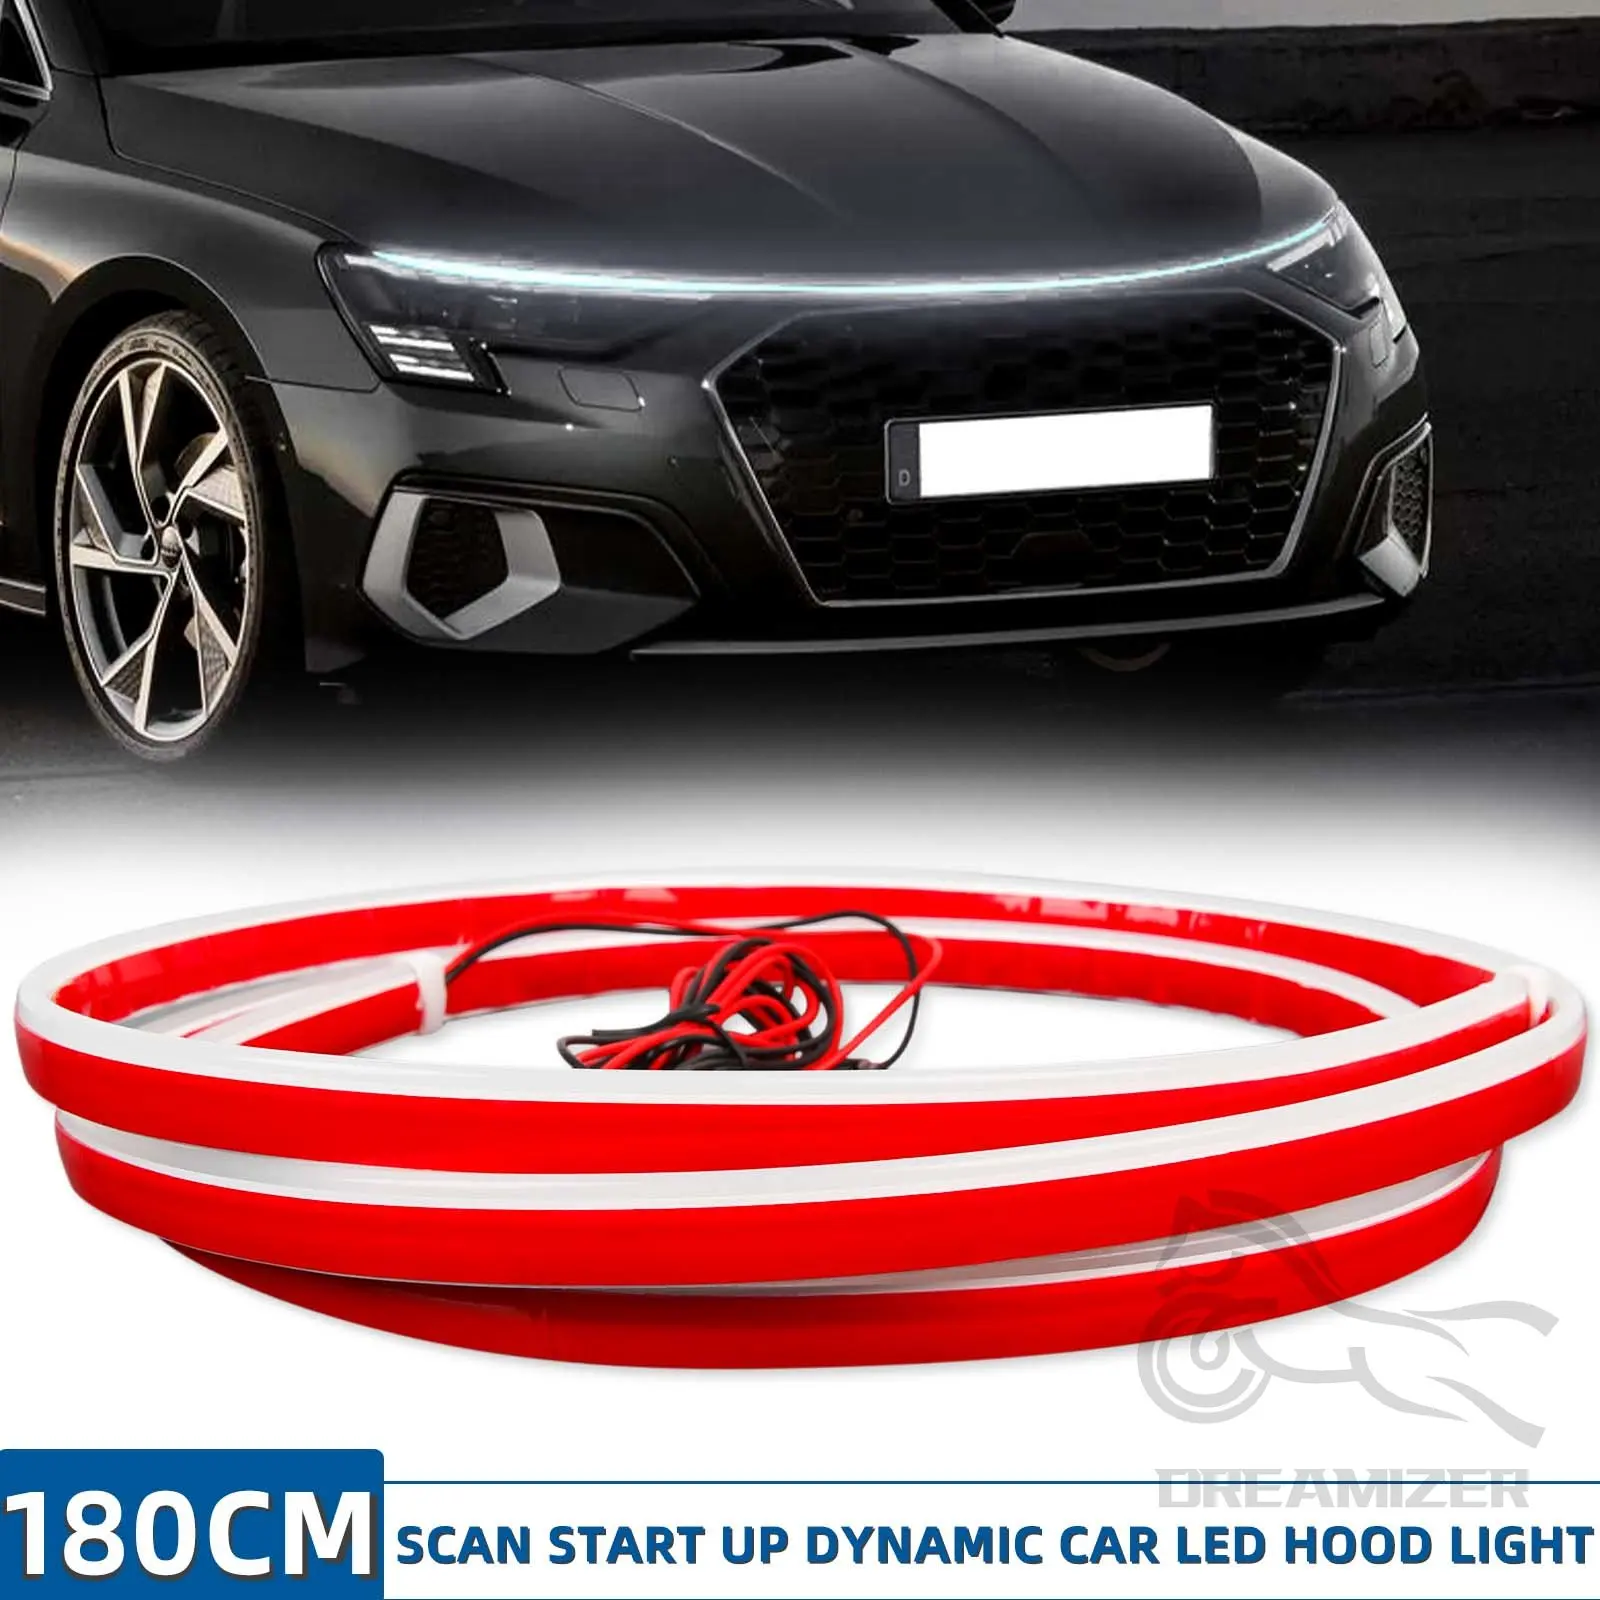 

180cm/240cm 12V Car LED Hood Daytime Running Light Strip Waterproof Flexible Auto LED Decorative Atmosphere Lamp Ambient